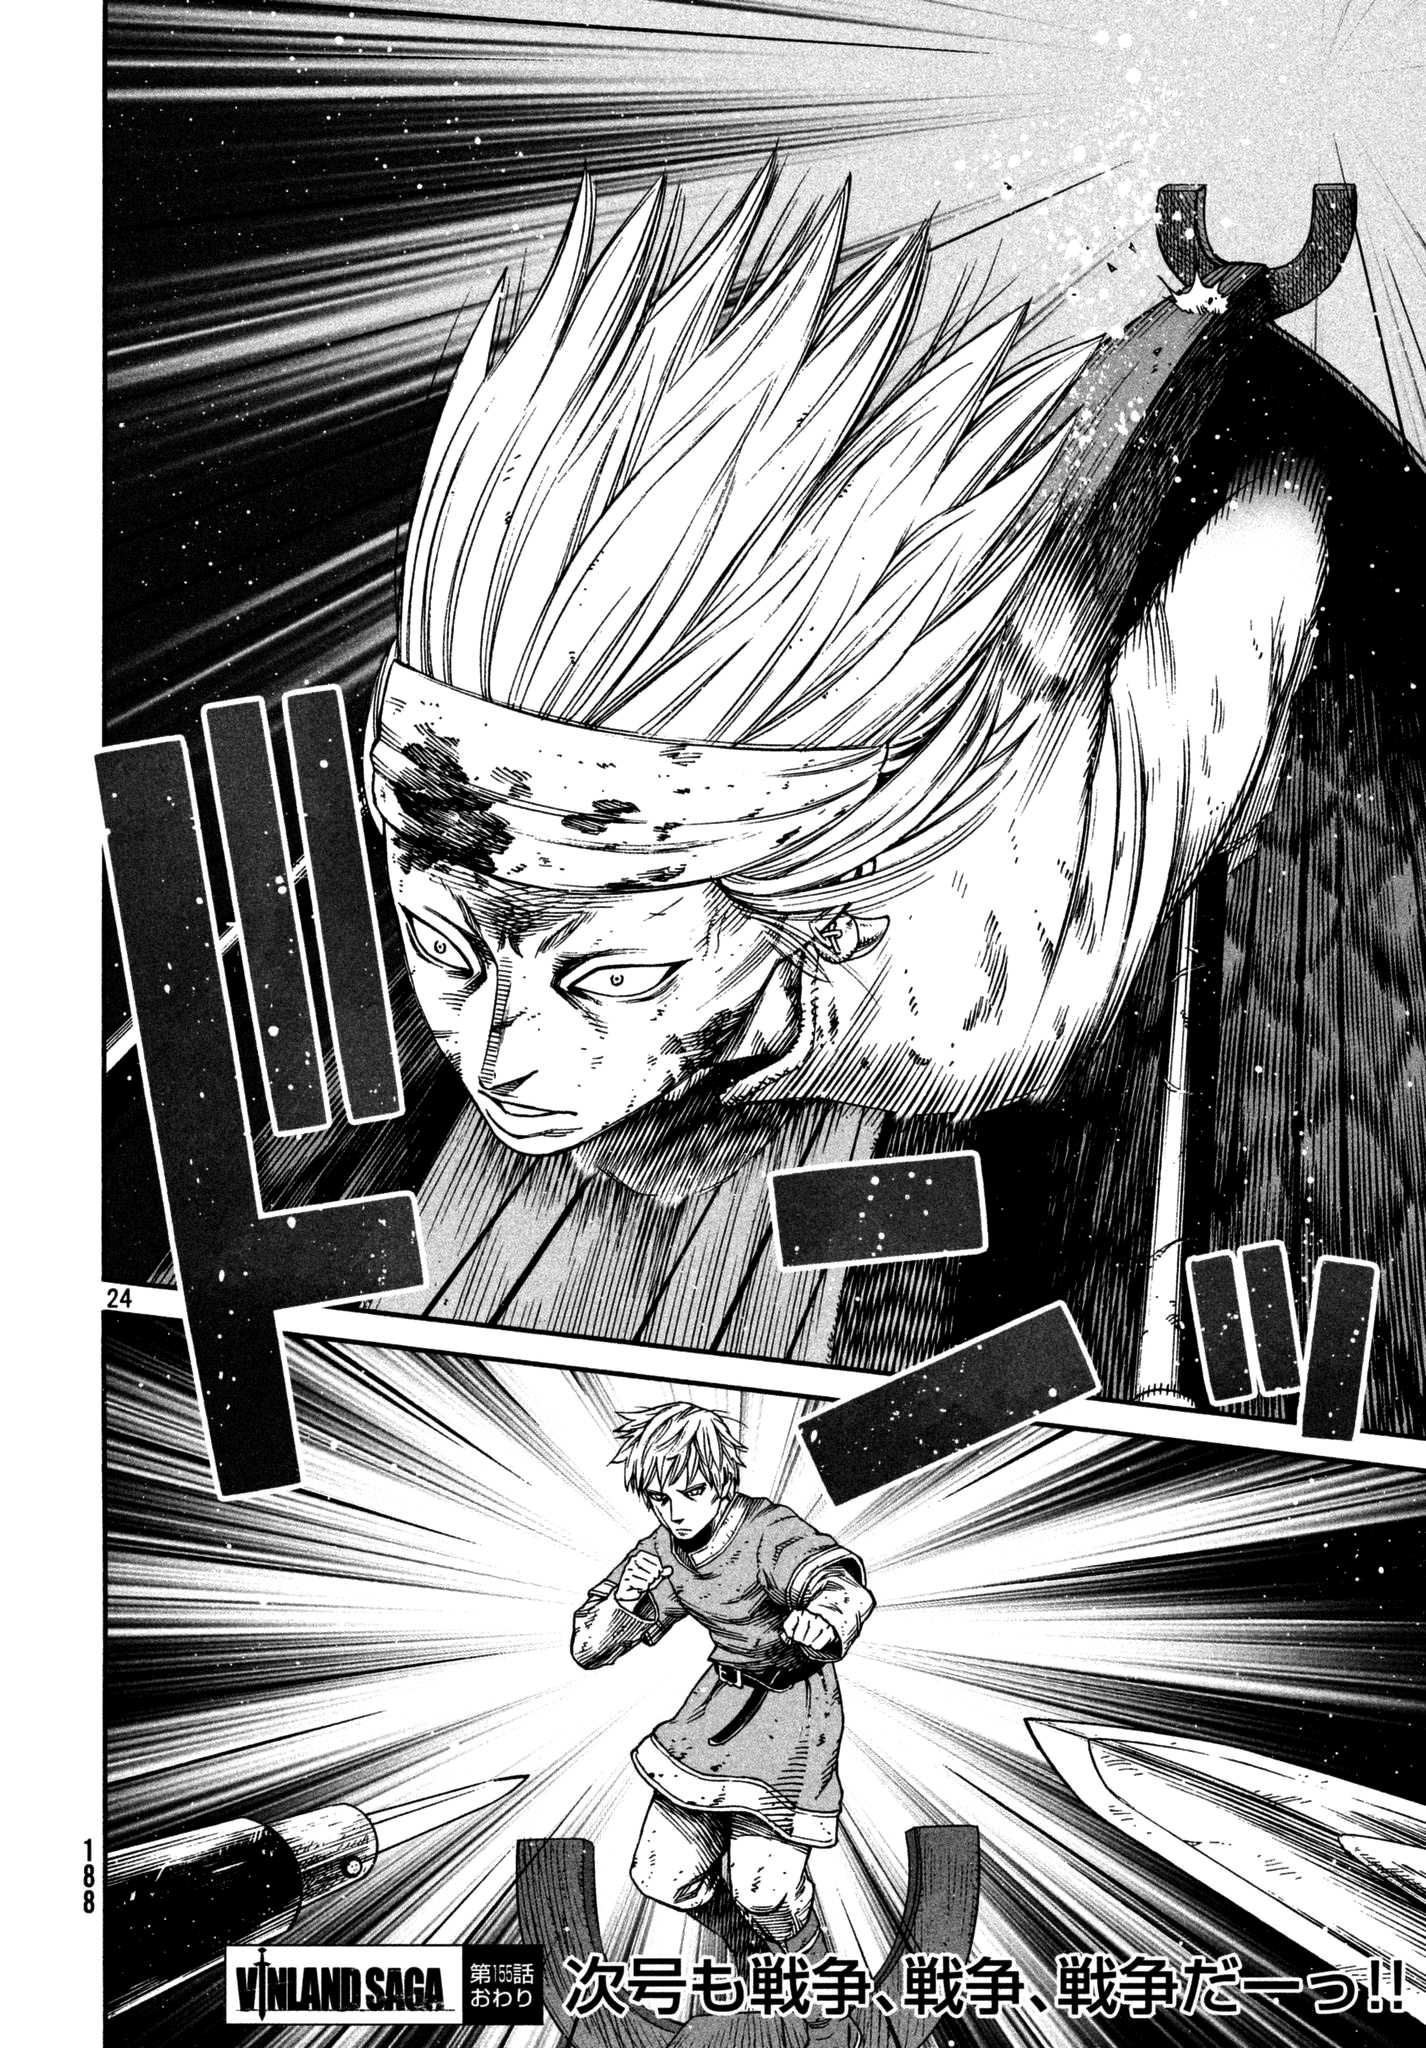 Vinland Saga Manga Manga Chapter - 155 - image 23